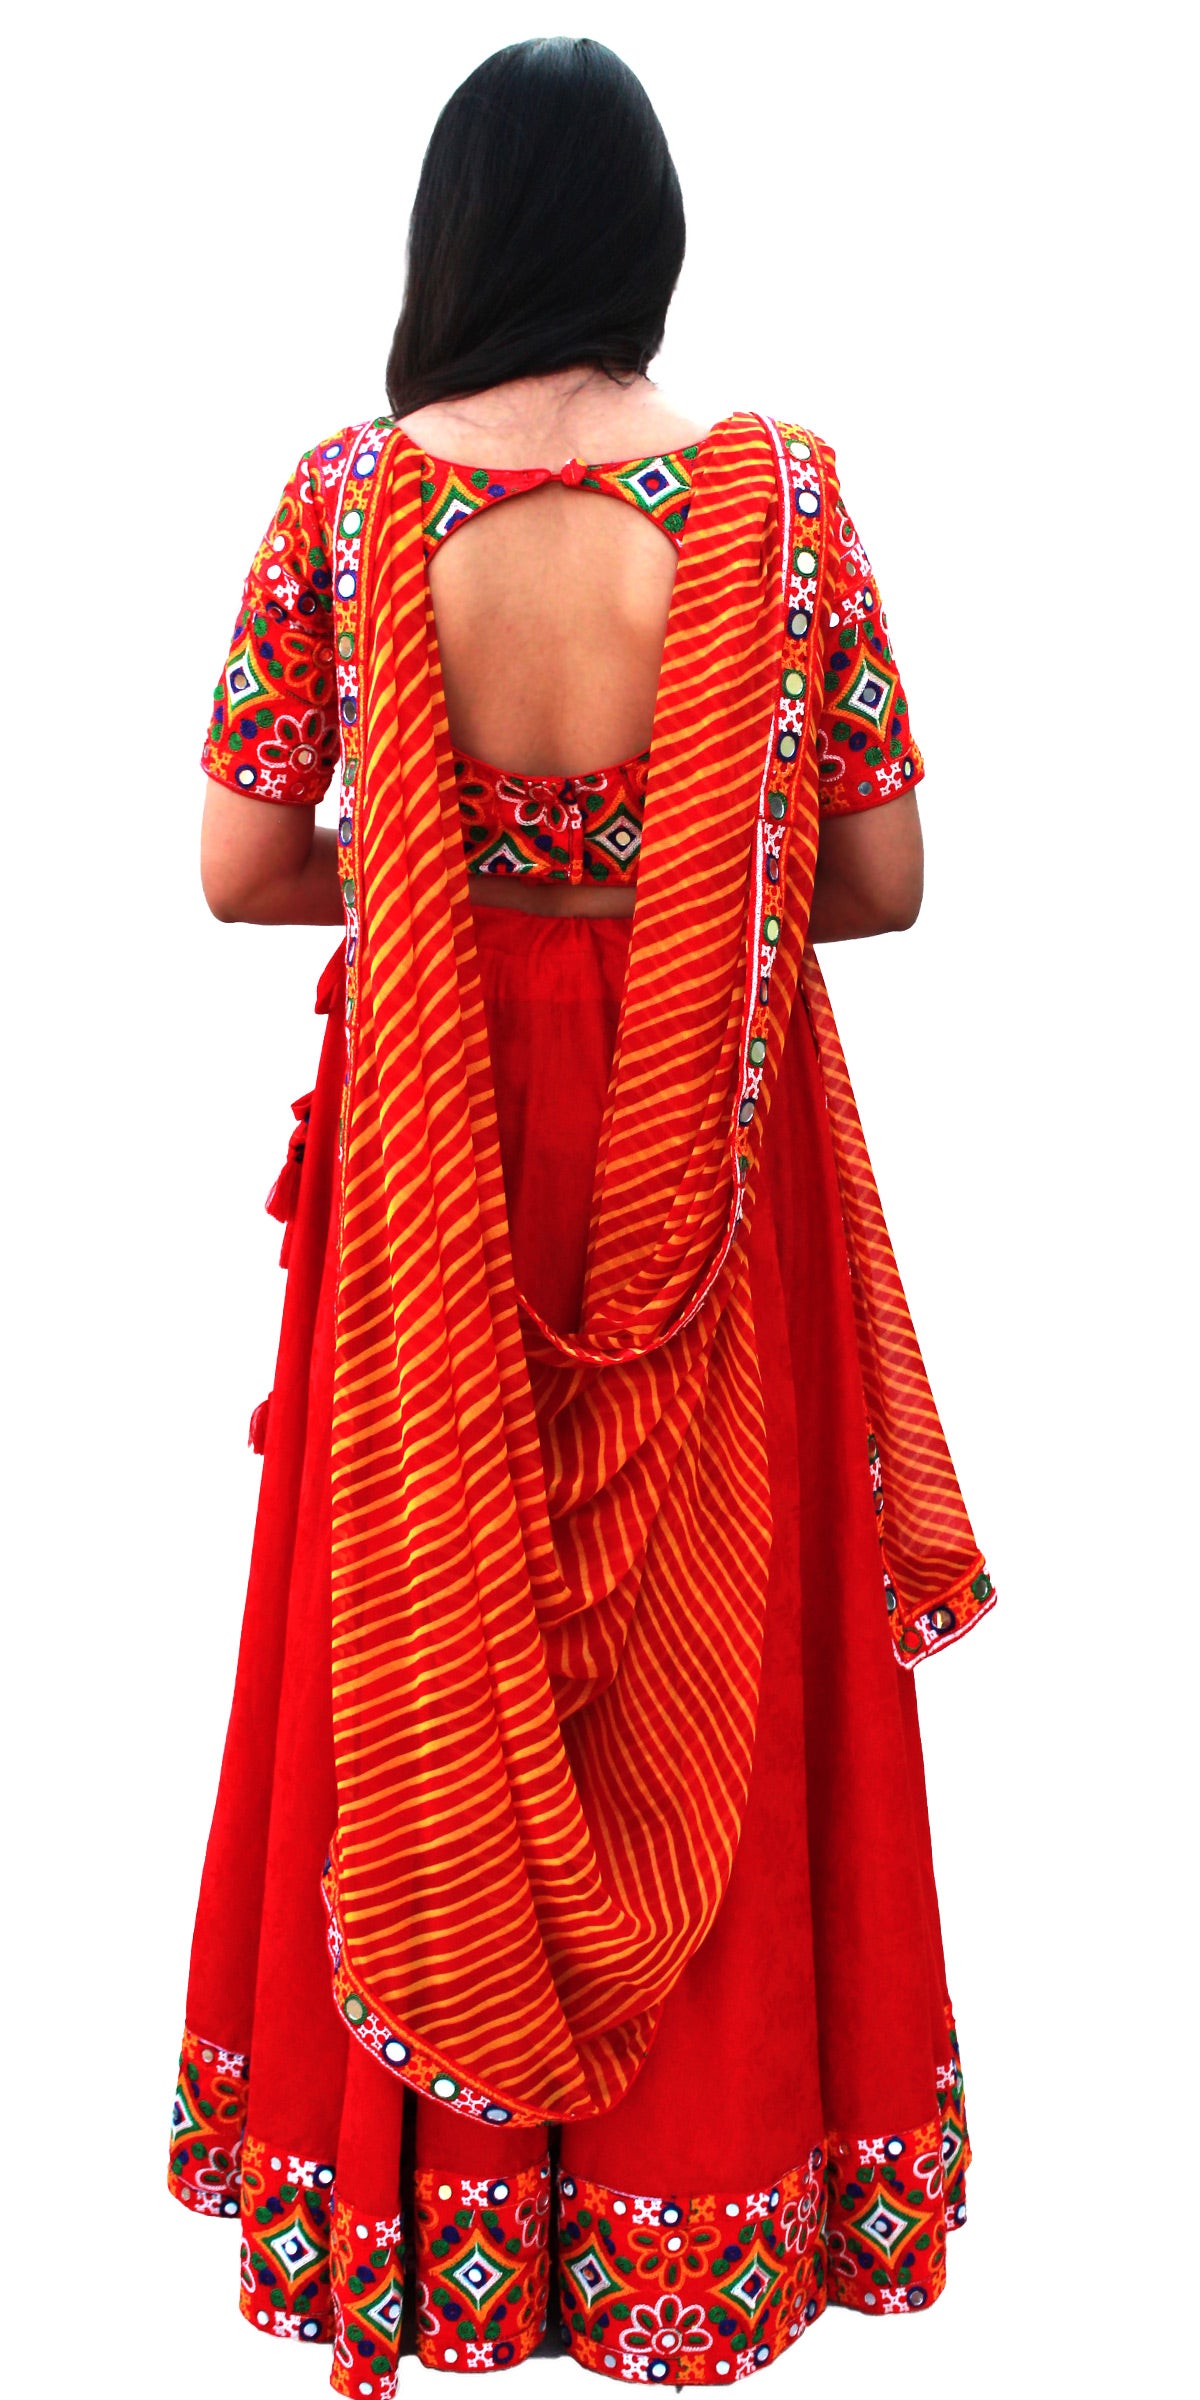 Gujarati Boy Indian State Fancy Dress Costume - BarbieTales.com